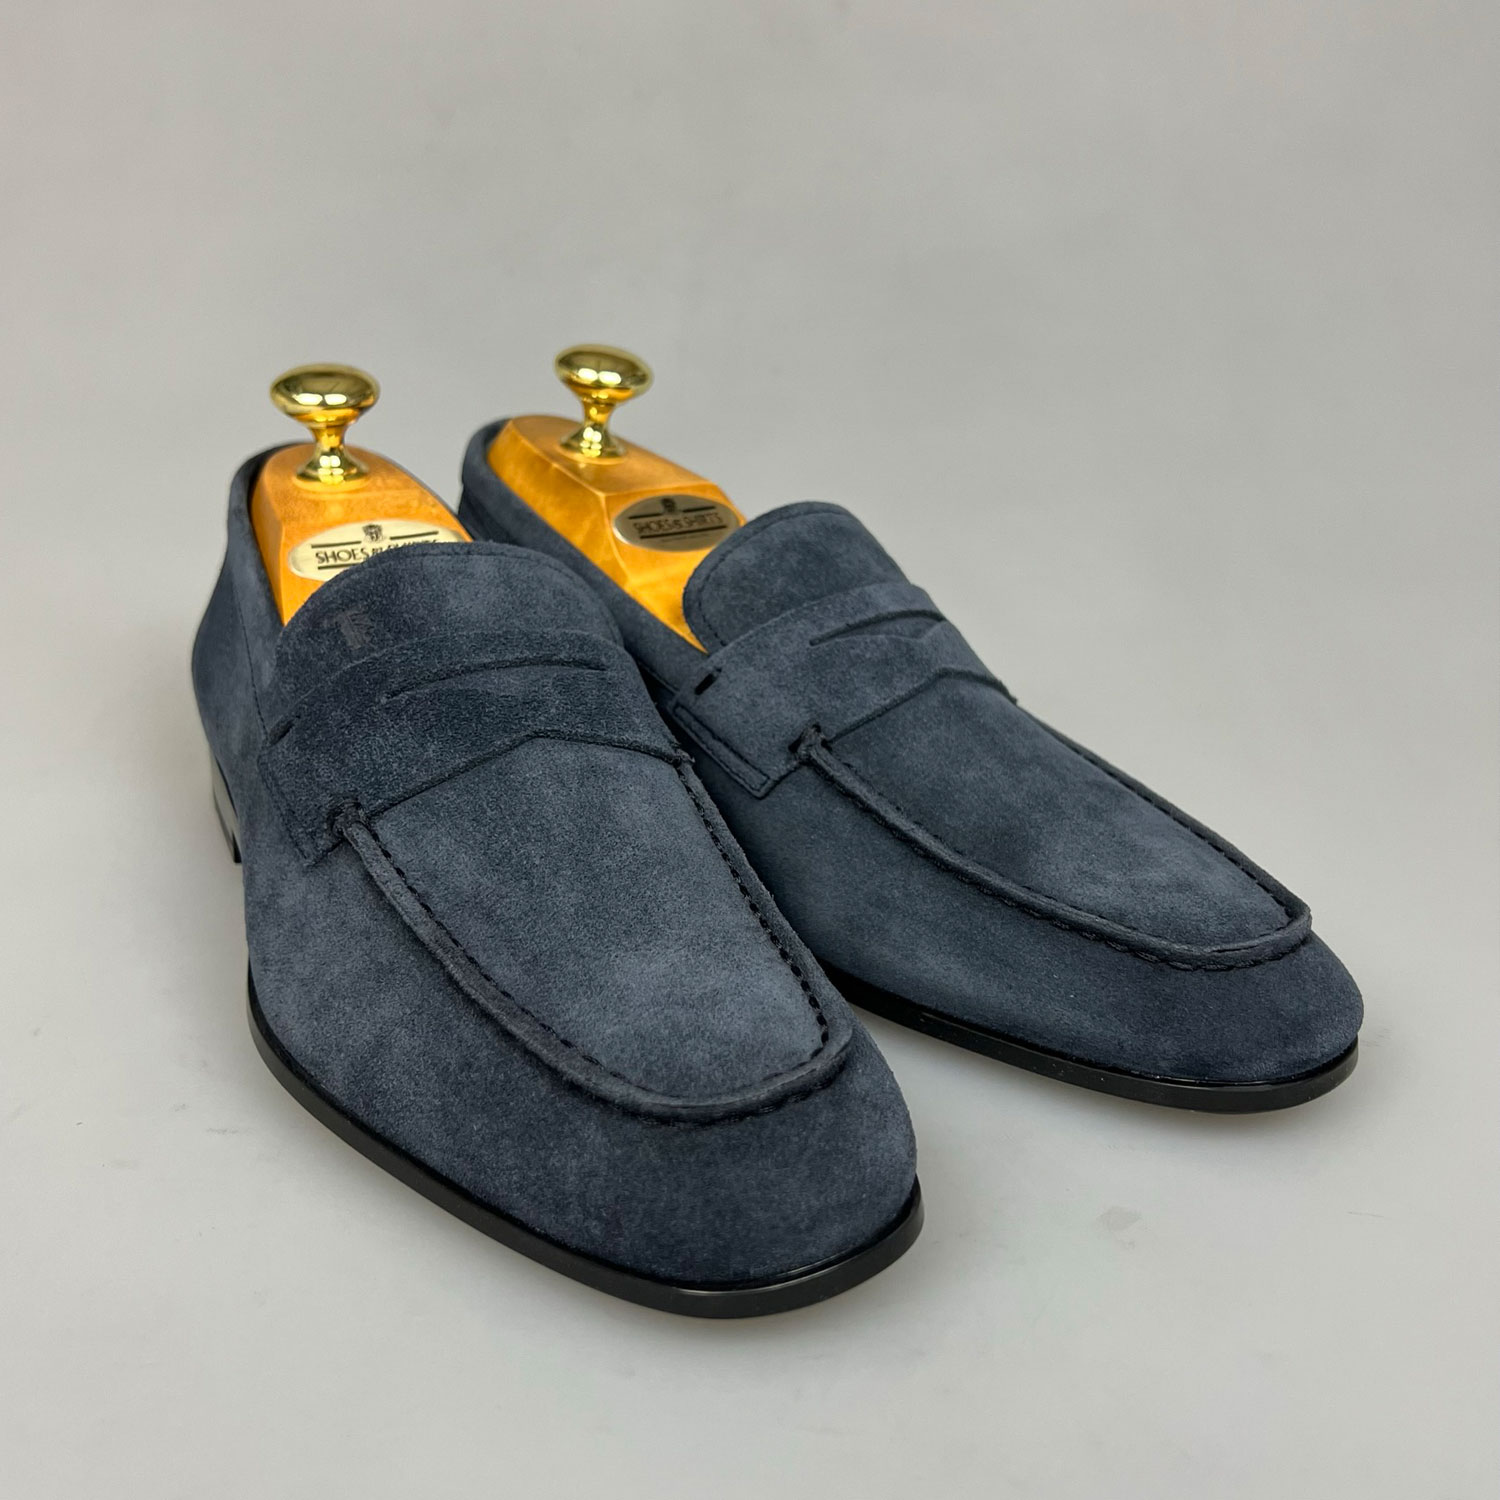 Malu Shoes Scarpe uomo mocassini inglese college liscio vera pelle nero  elegante made in italy fondo gomma leggera cerimonia - Stileo.it